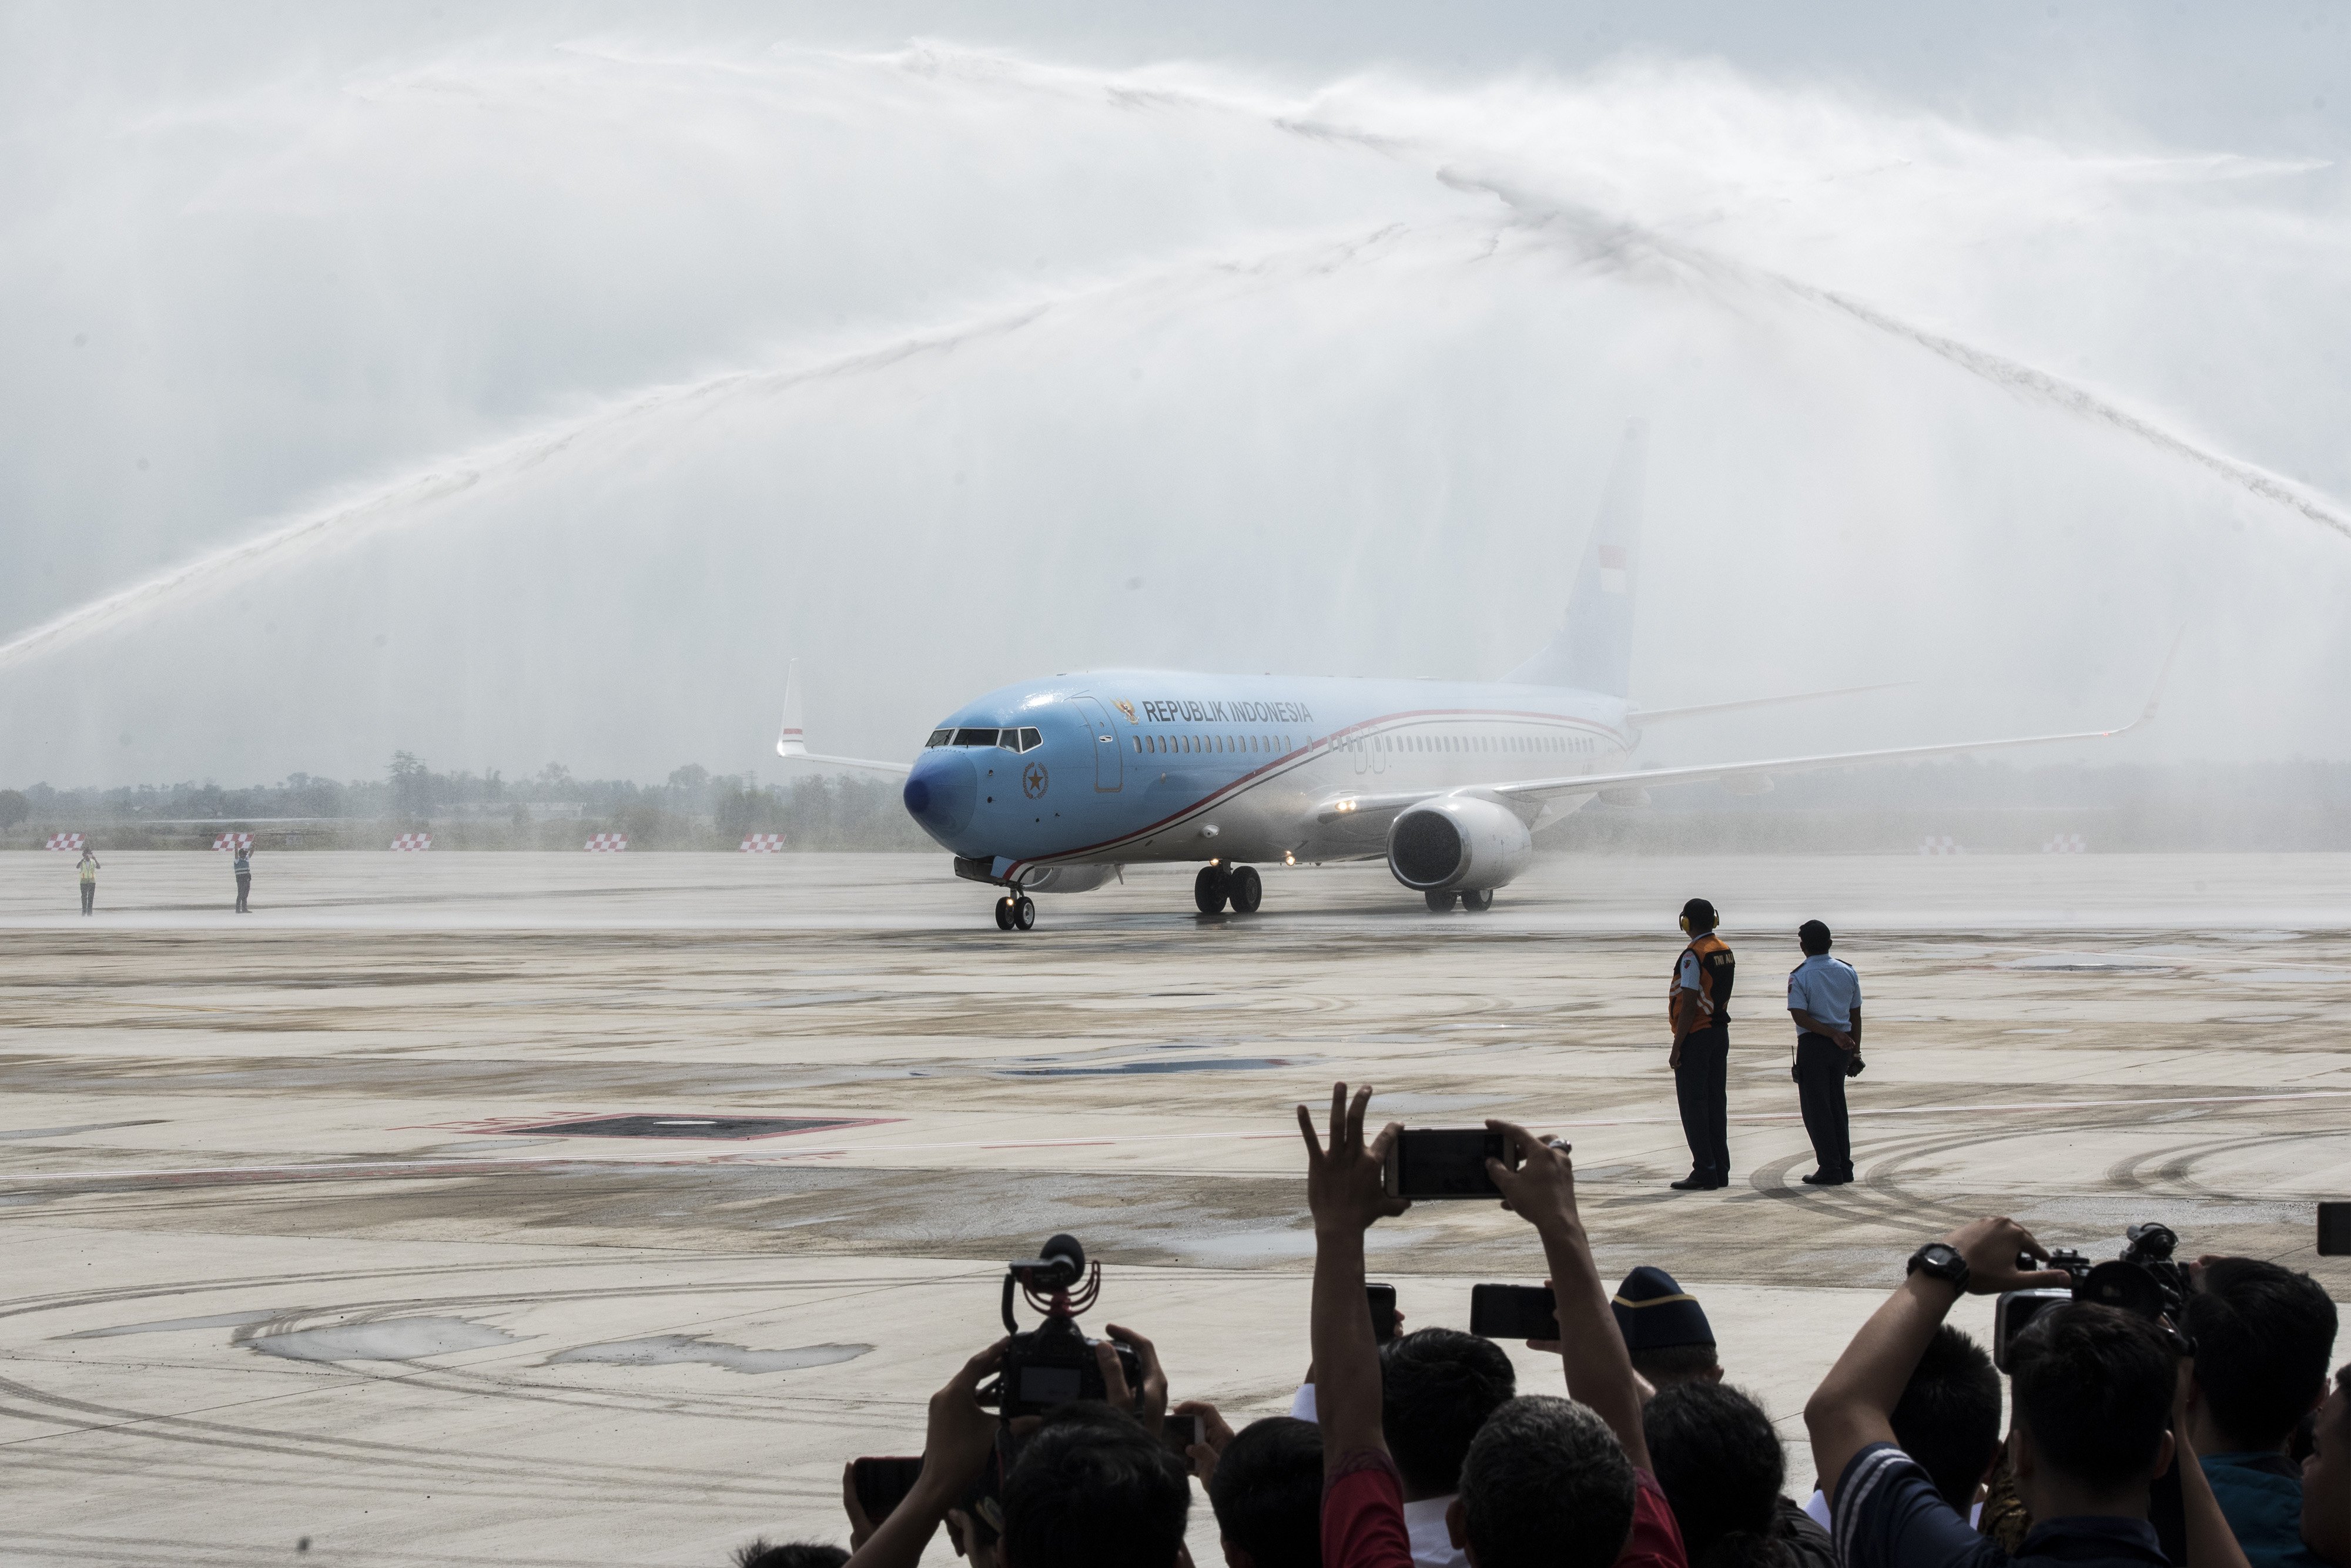 Pesawat Kepresidenan yang ditumpangi Presiden Joko Widodo dan rombongan disambut prosesi water salute (penyiraman air) sebagai bagian dari Historical flight saat mendarat di Bandara Internasional Jawa Barat (BIJB) Kertajati, Majalengka, Jawa Barat, Kamis (24/5).